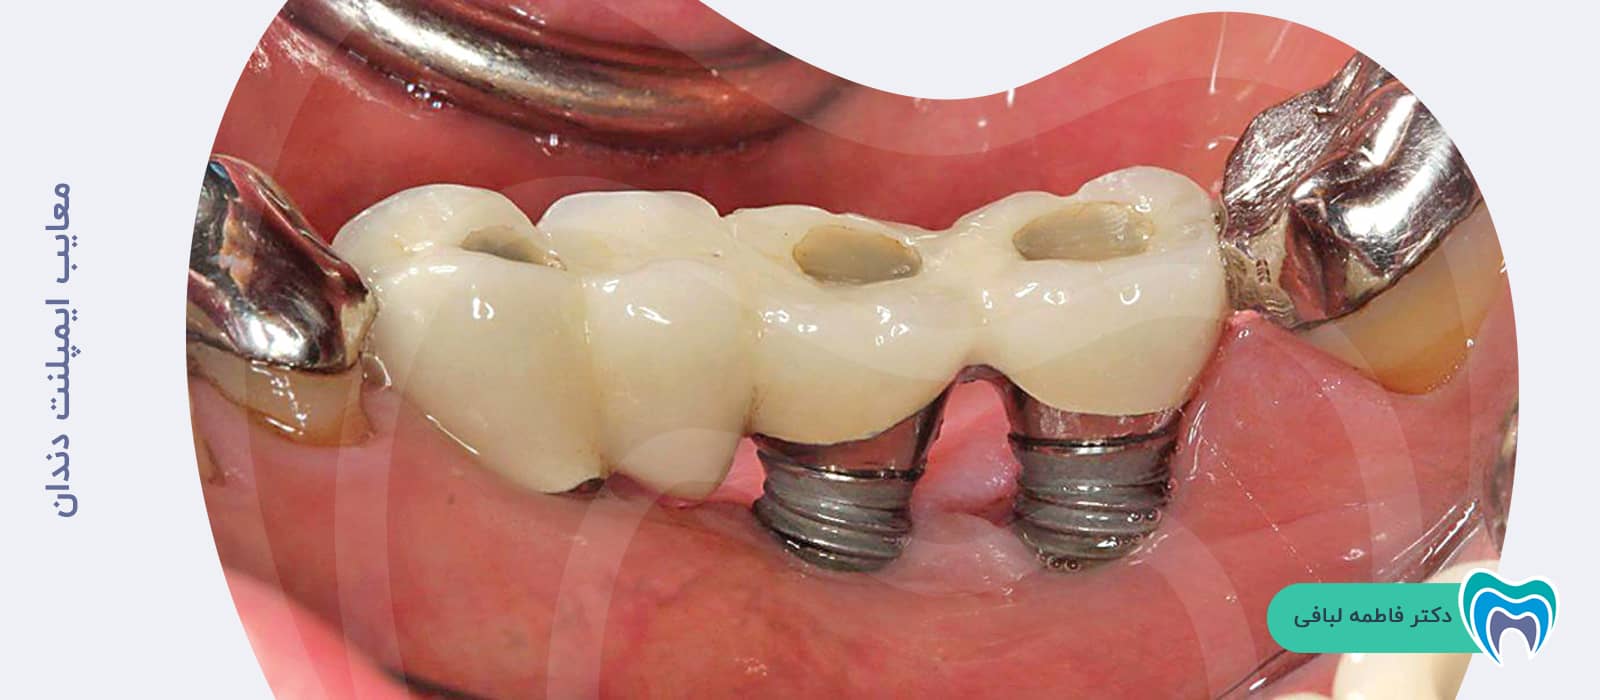  عوارض ایمپلنت دندان